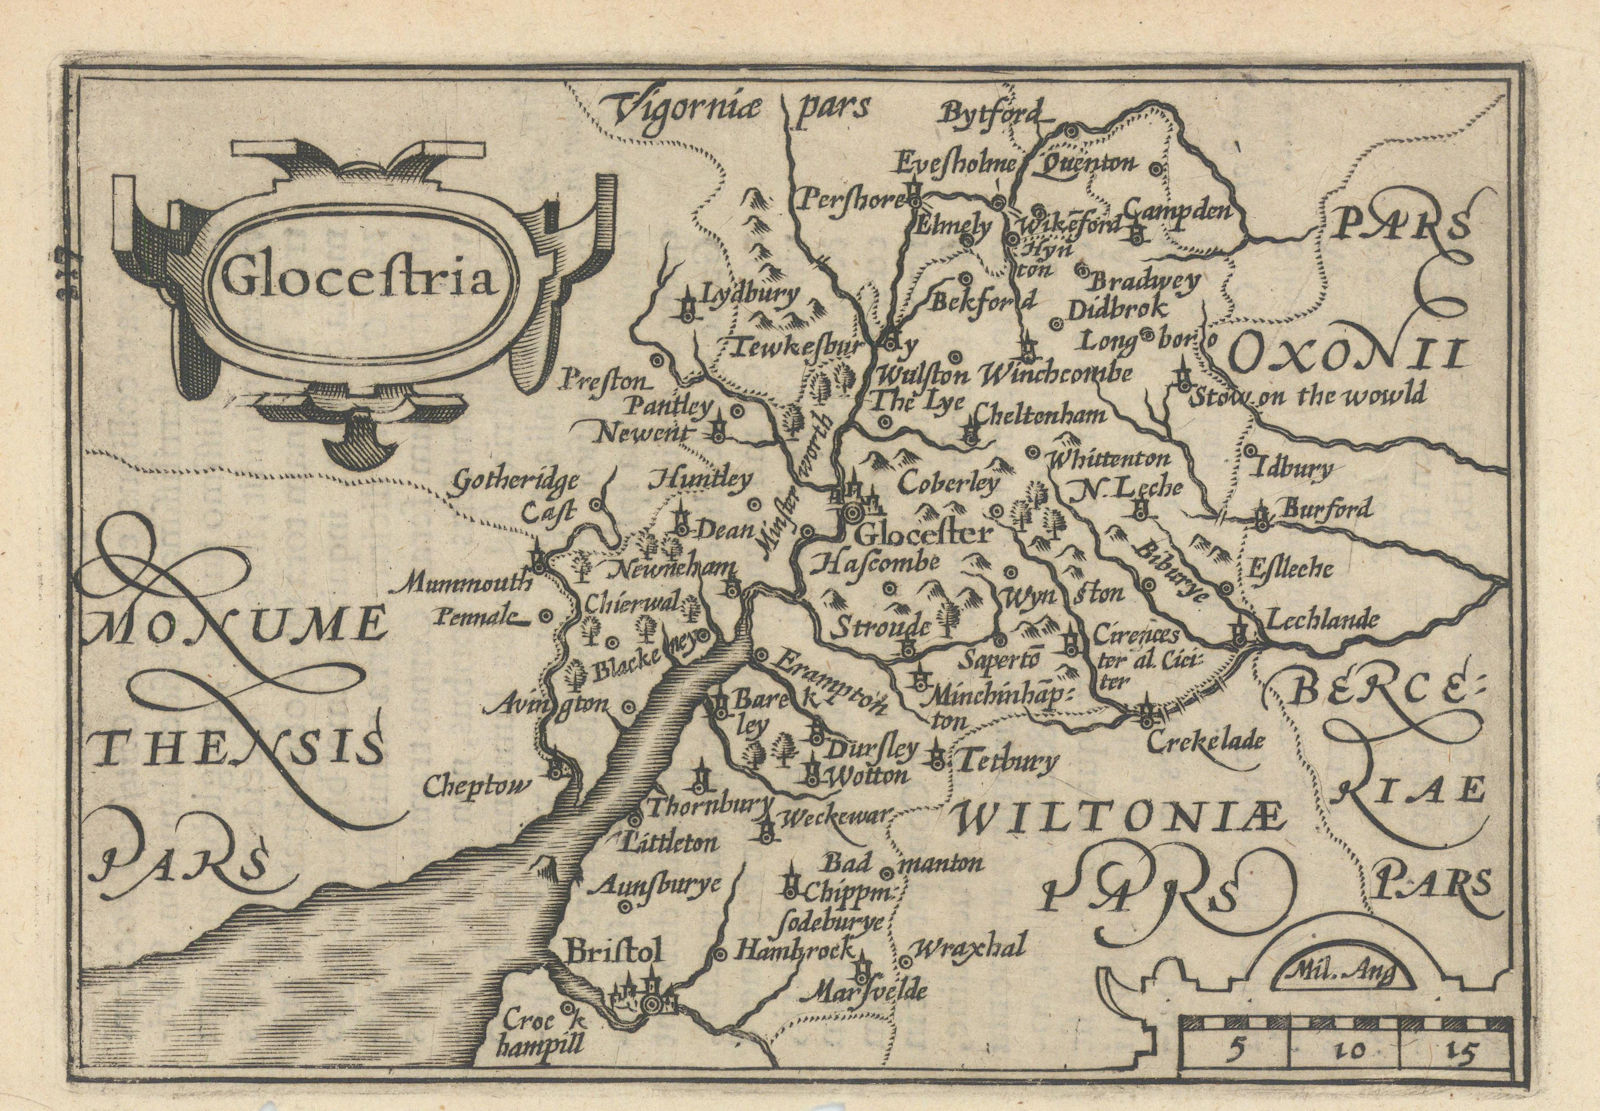 Glocestria by van den Keere. "Speed miniature" Gloucestershire county map 1617